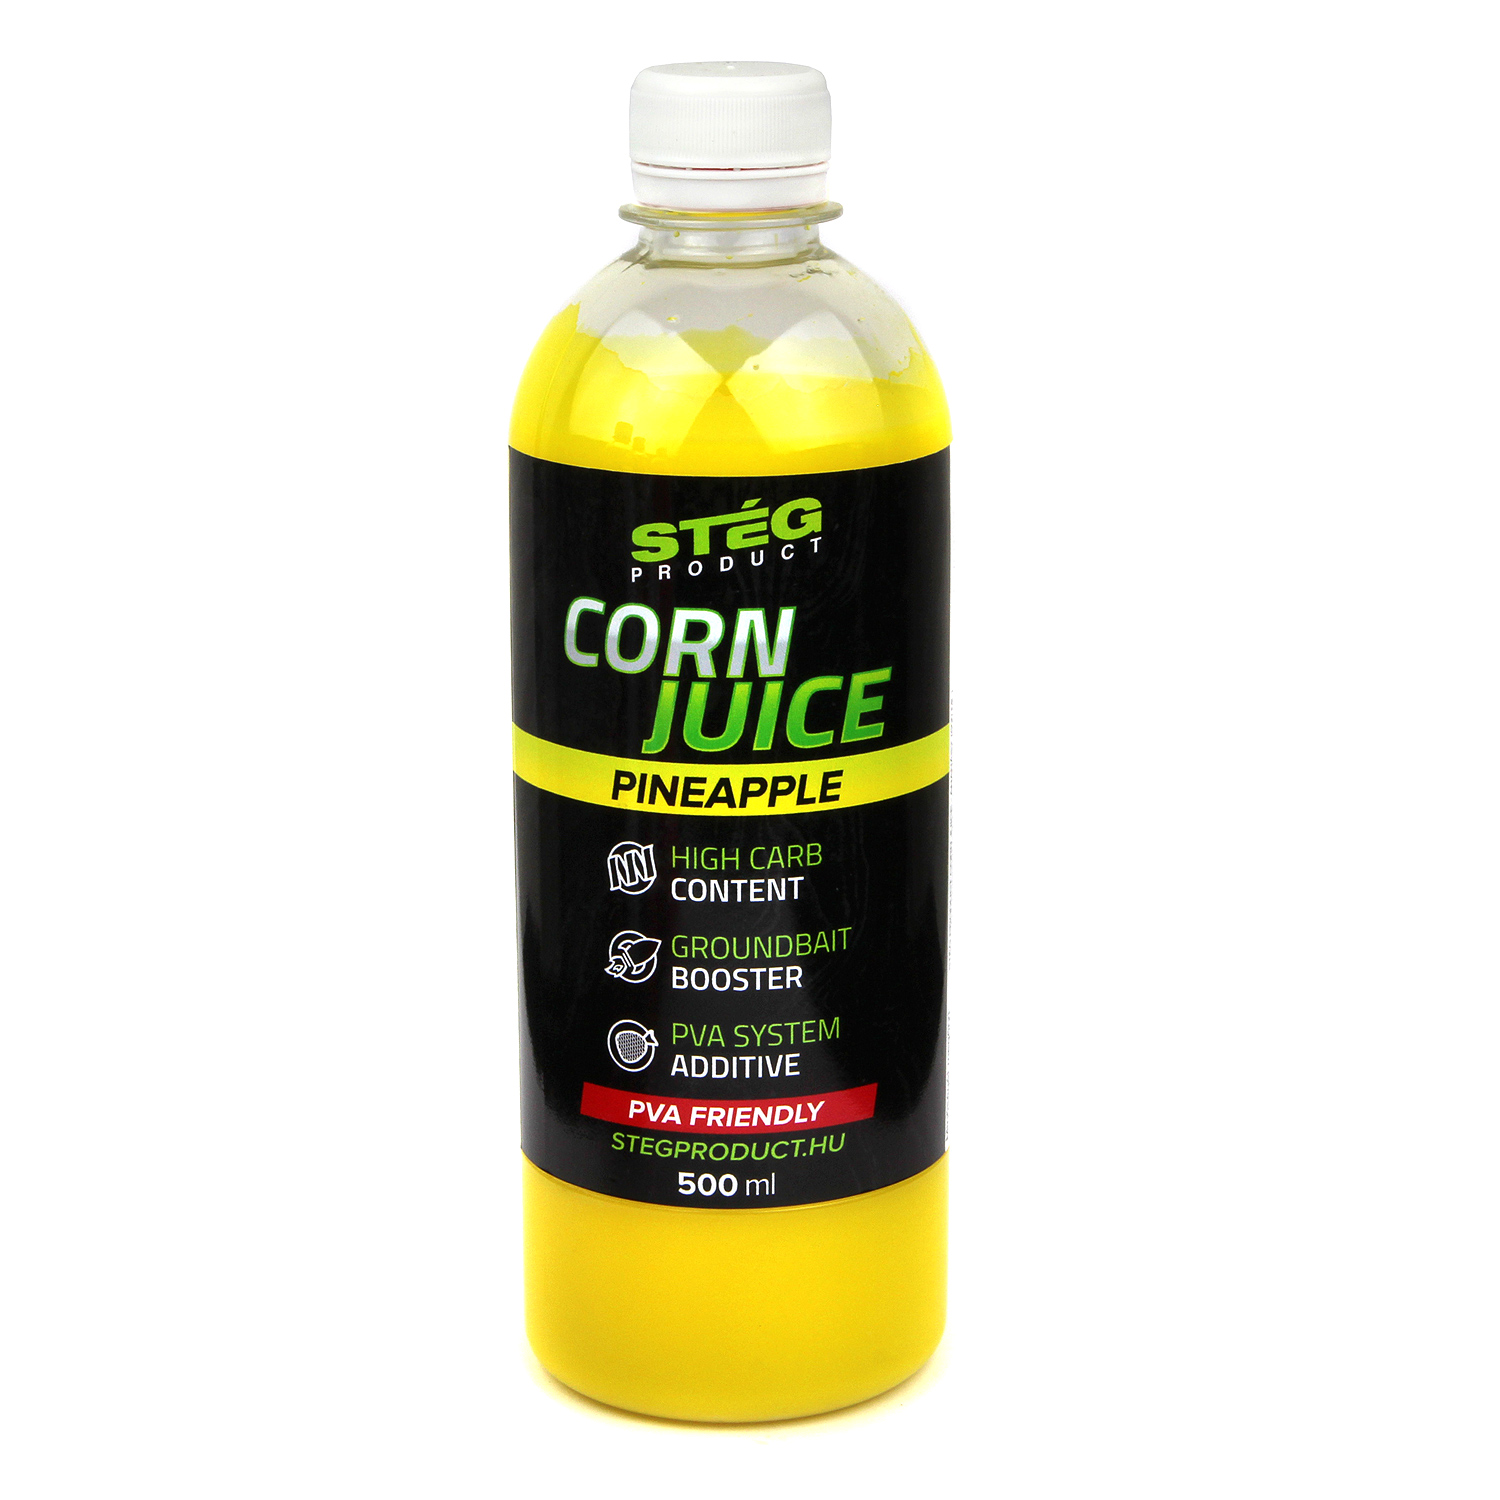 Stg Corn Juice Pineapple 500ml